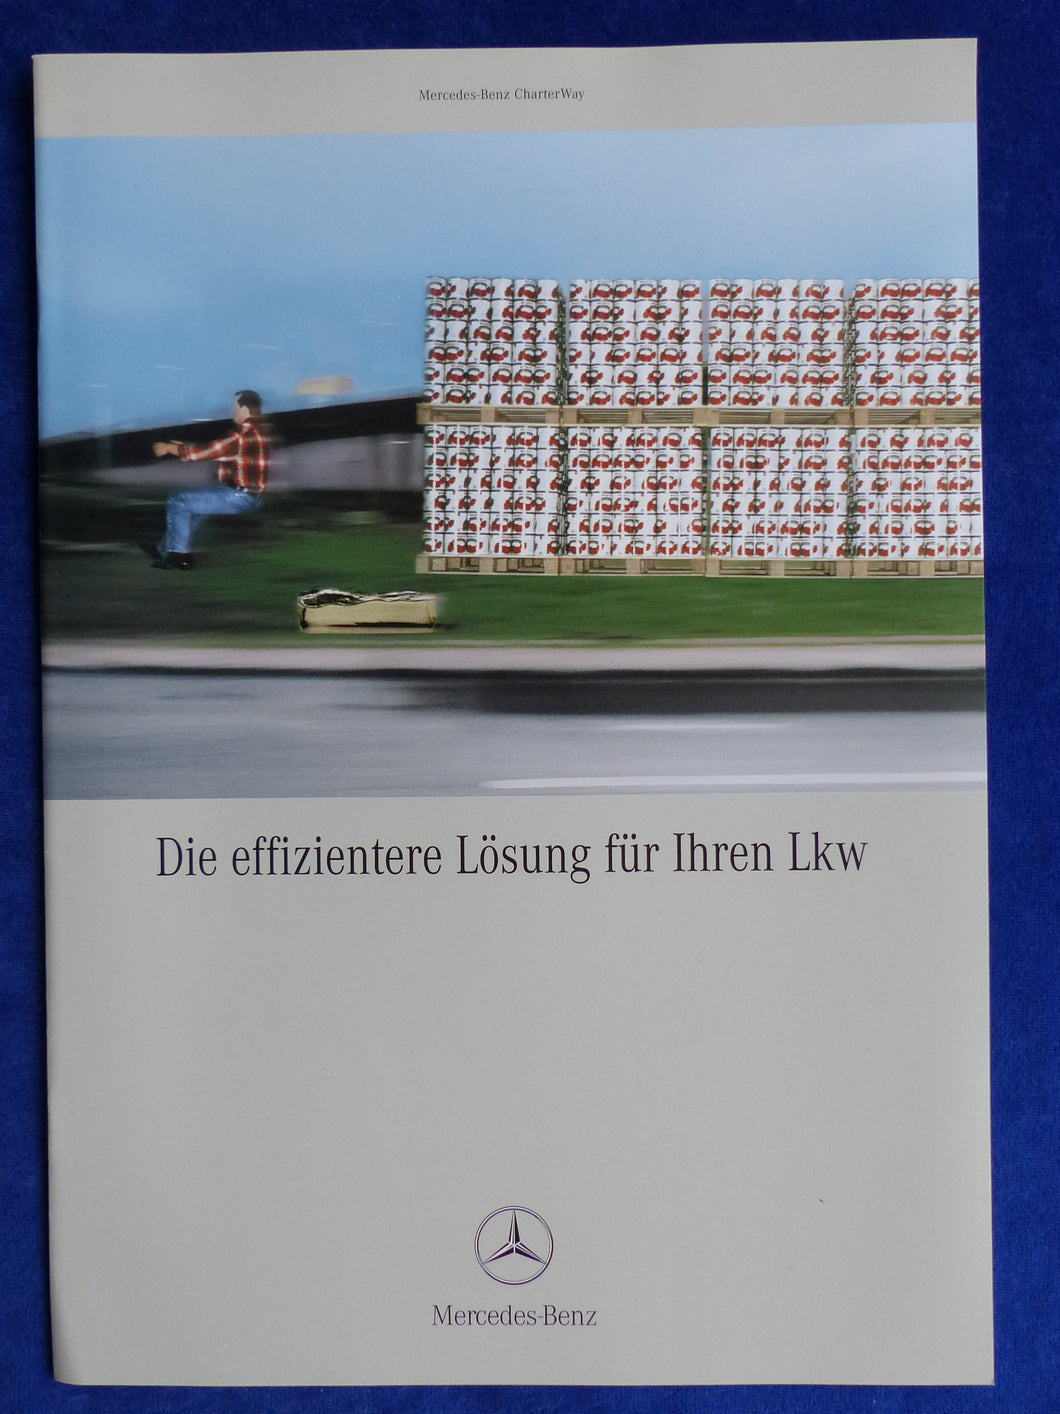 Mercedes CharterWay LKW Nutzfahrzeug Service-Leasing - Prospekt Brochure 06.2000